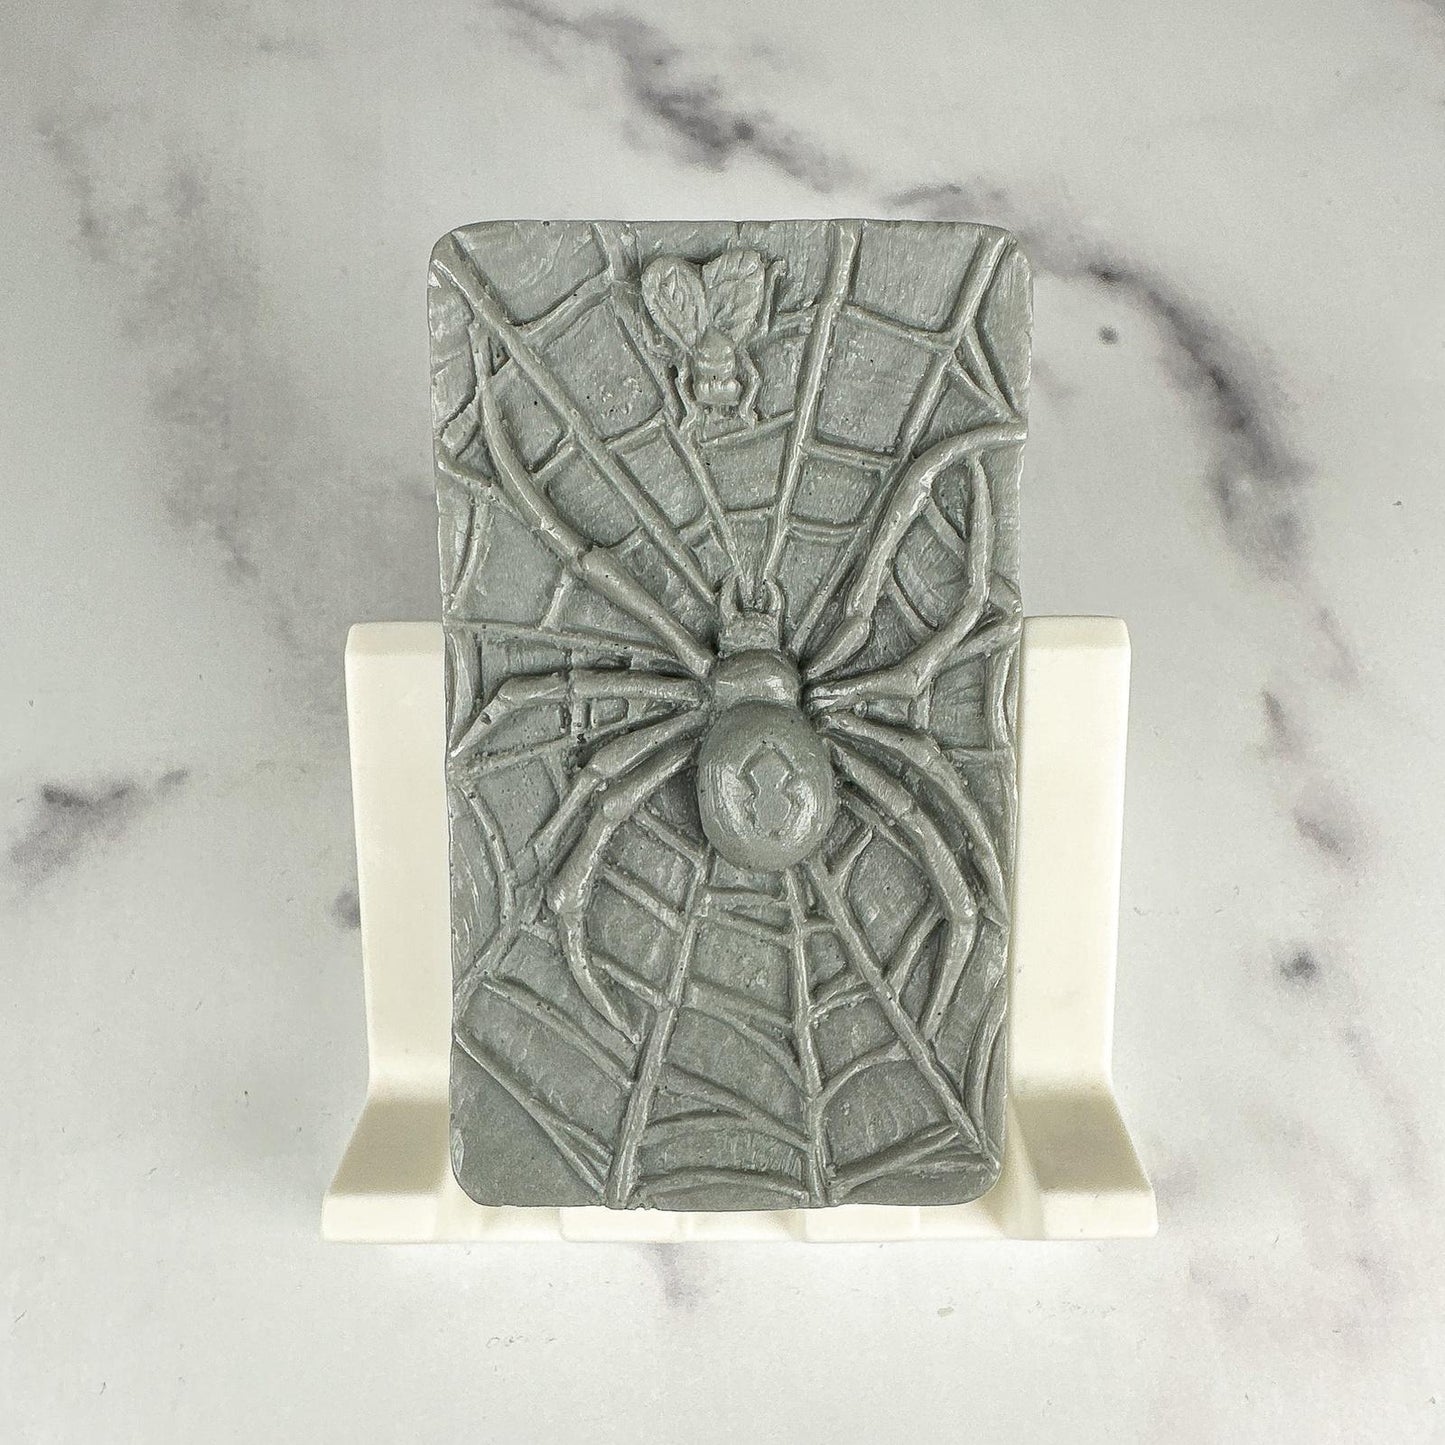 Spiderweb Soap Bar - The Serpentry